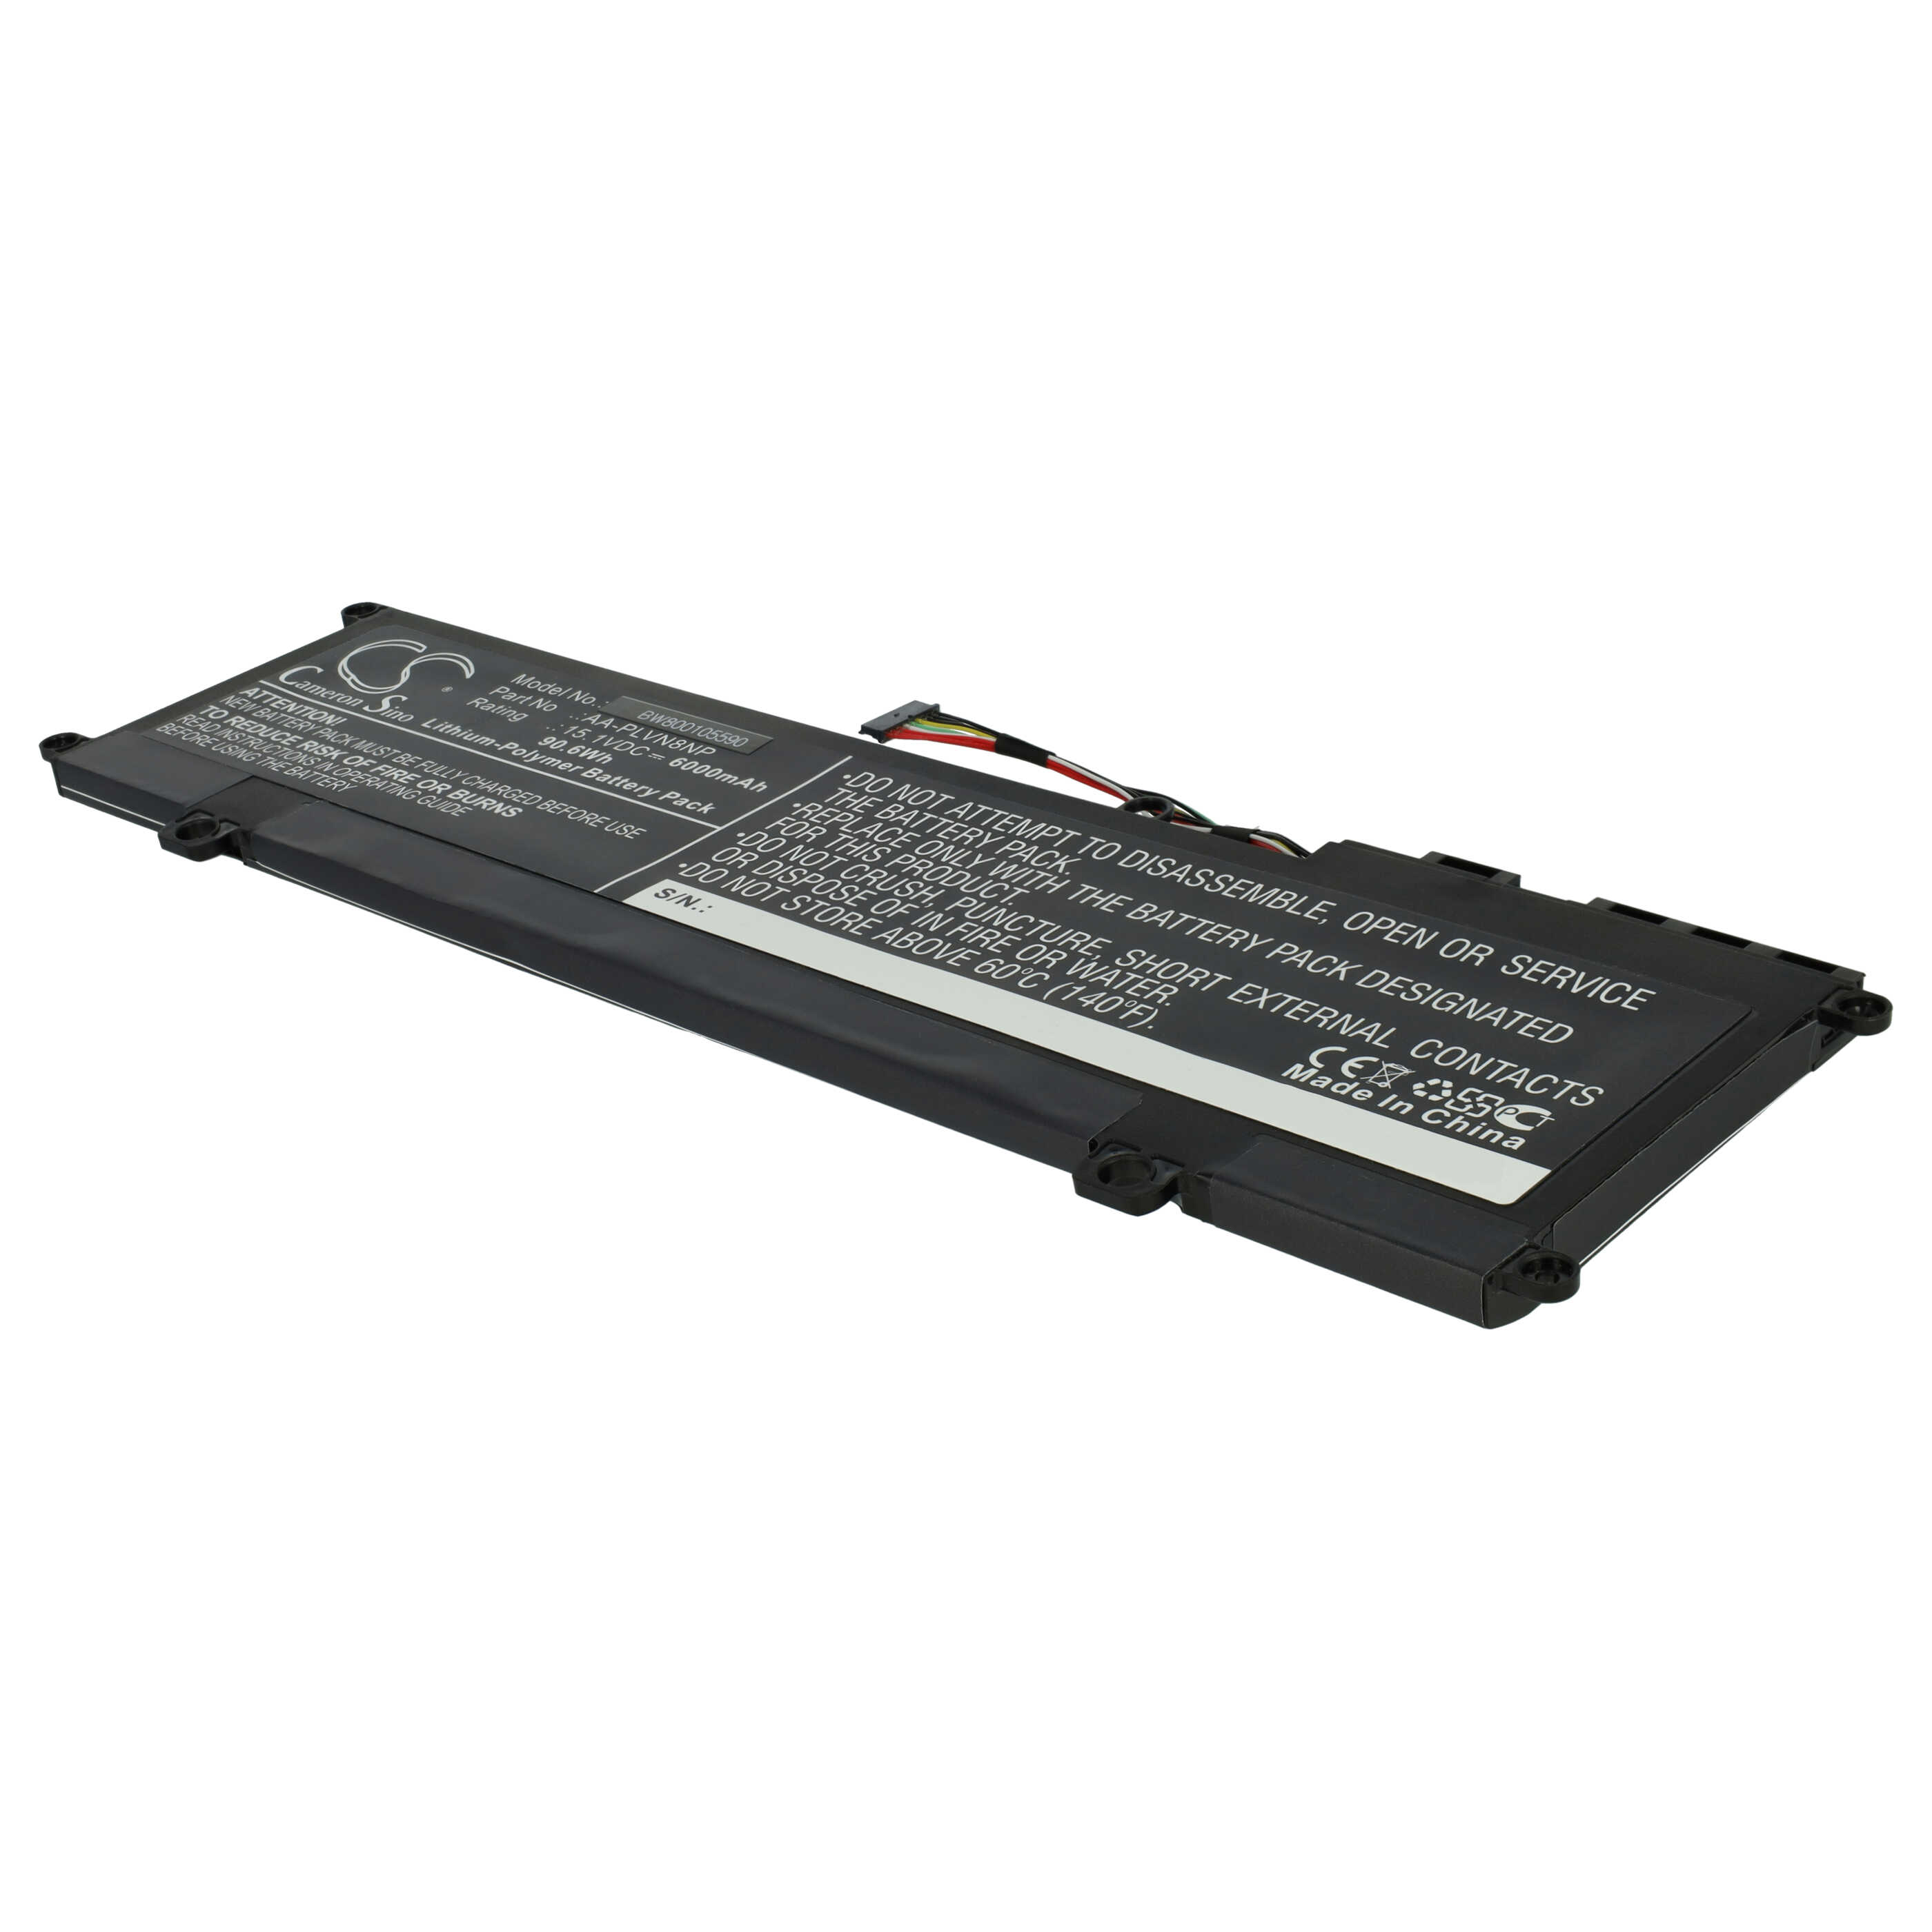 Batería reemplaza Samsung AA-PLVN8NP, BA43-00359A para notebook Samsung - 6000 mAh 15,1 V Li-poli negro